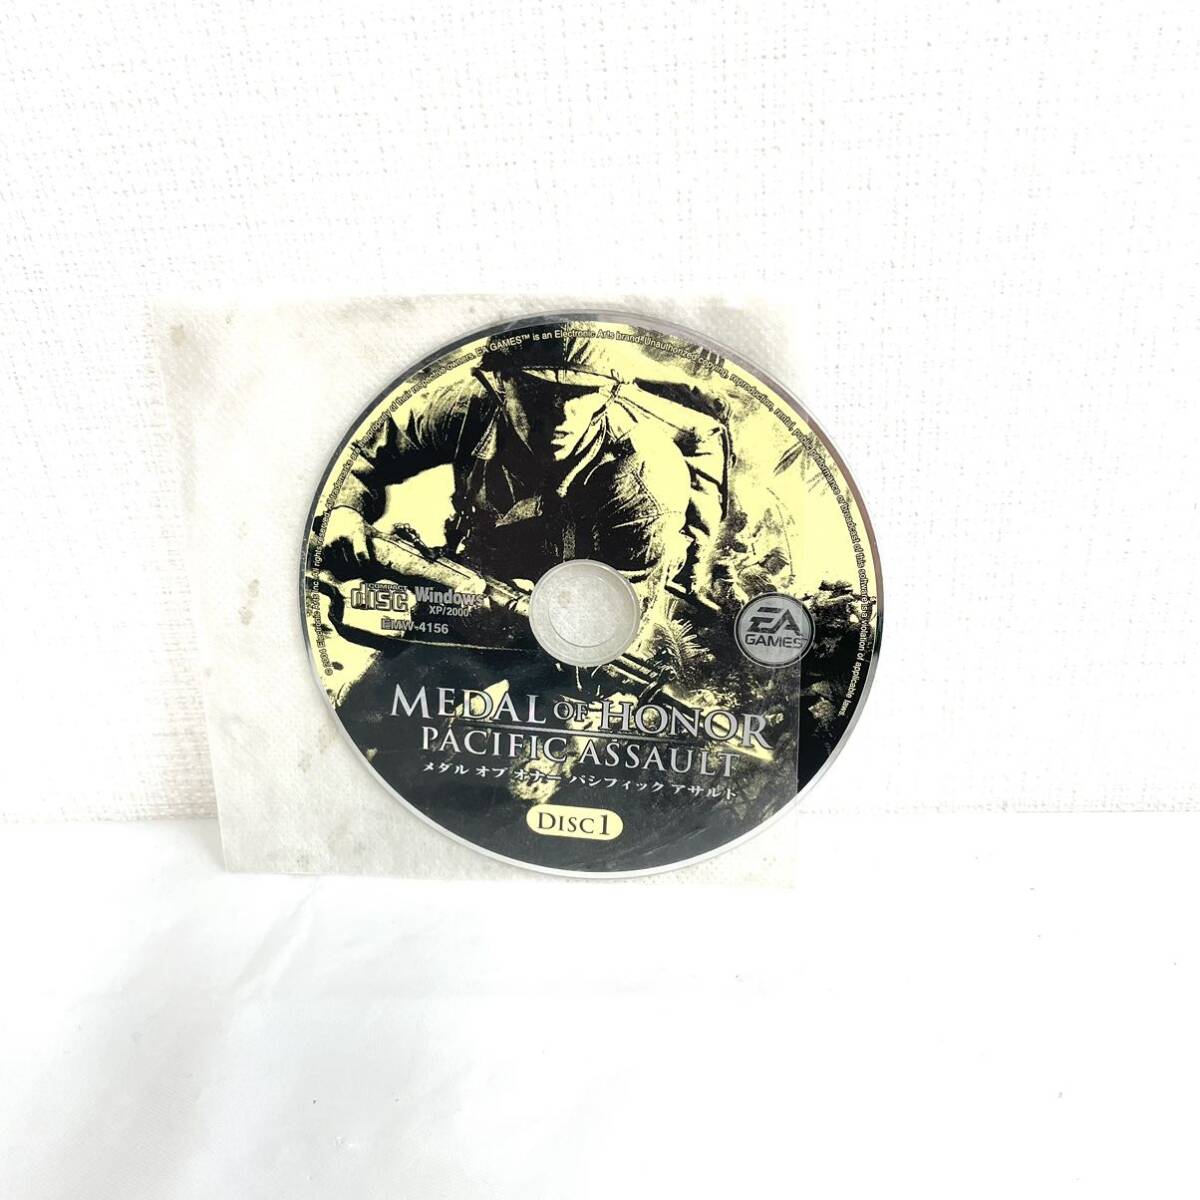 F04109 CD メダル オブ オナー パシフィック アサルト MEDAL OF HONOR PACIFIC ASSAULT DISC1 Windows XP 2000_画像1